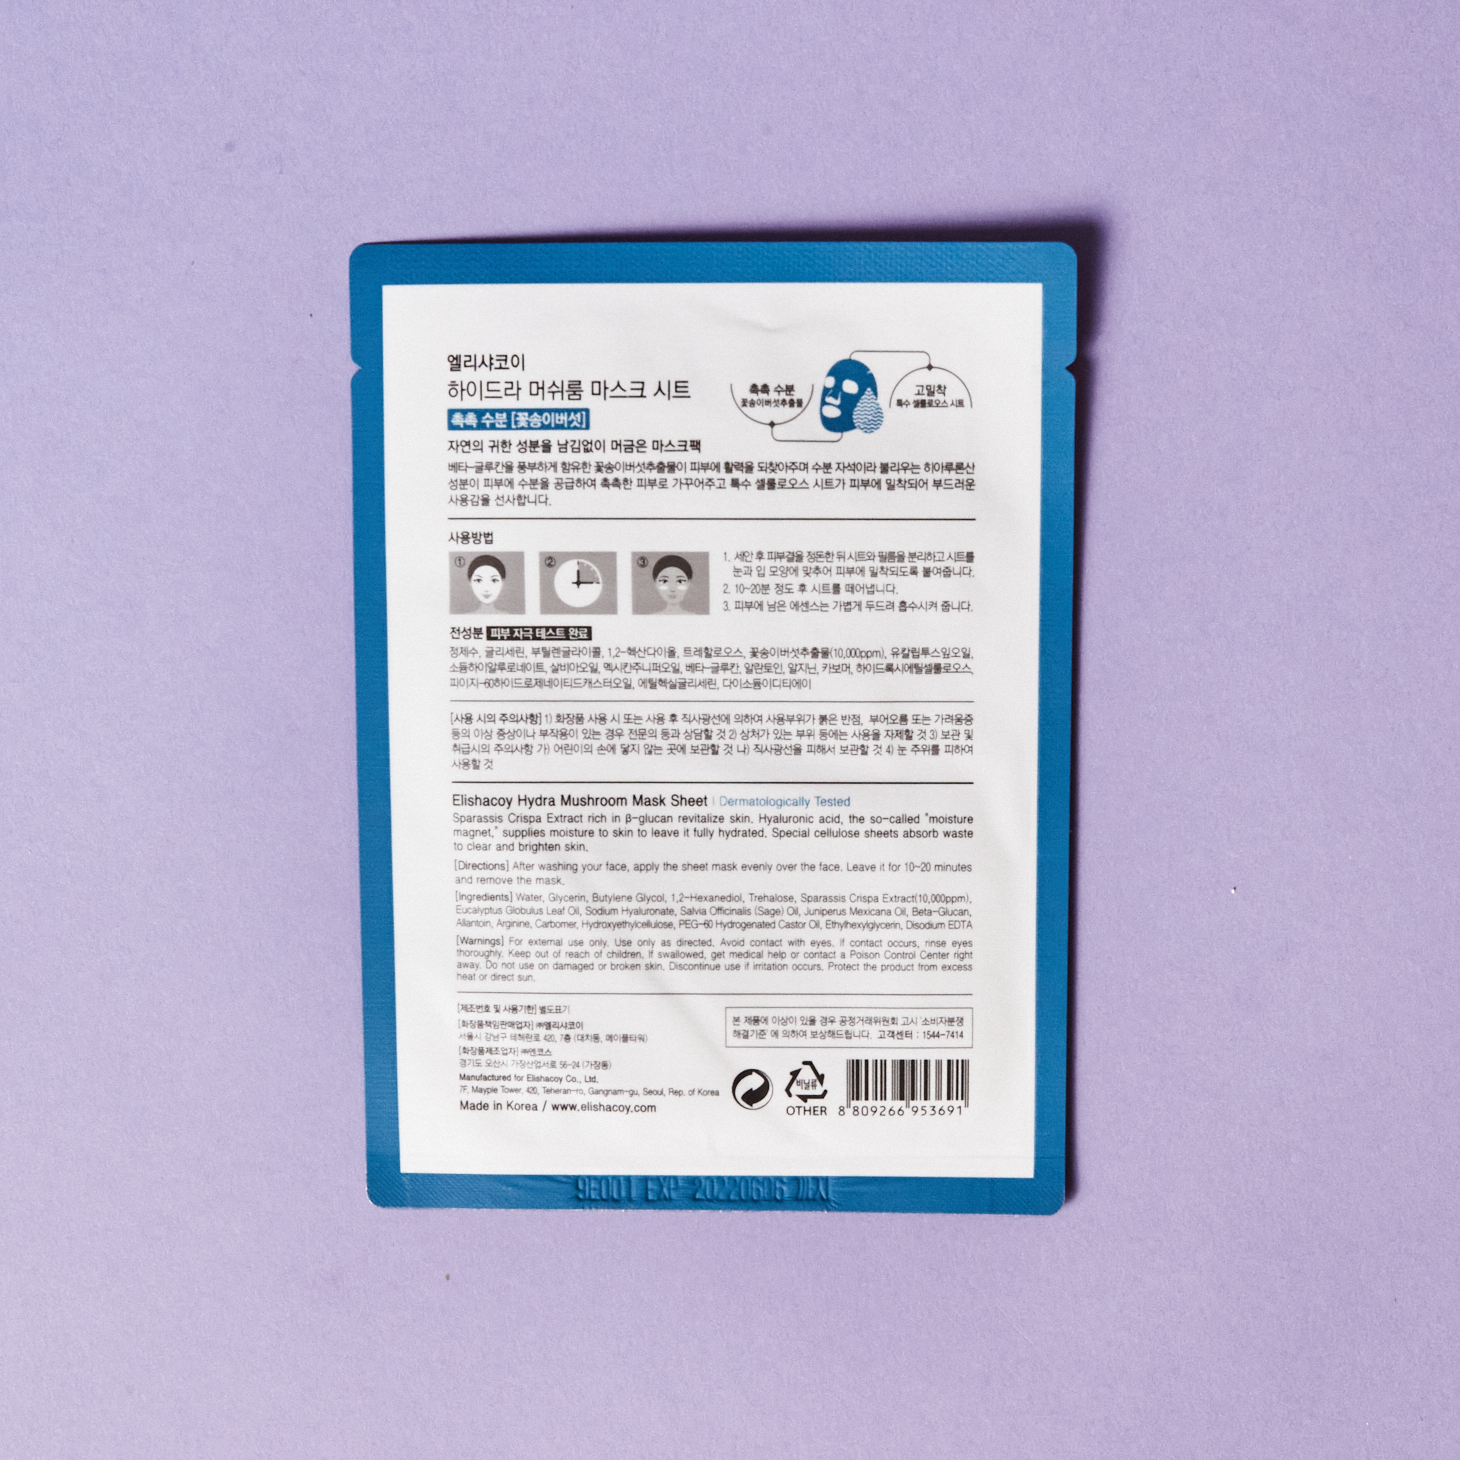 back of elishacoy sheet mask showing instructions and ingredients